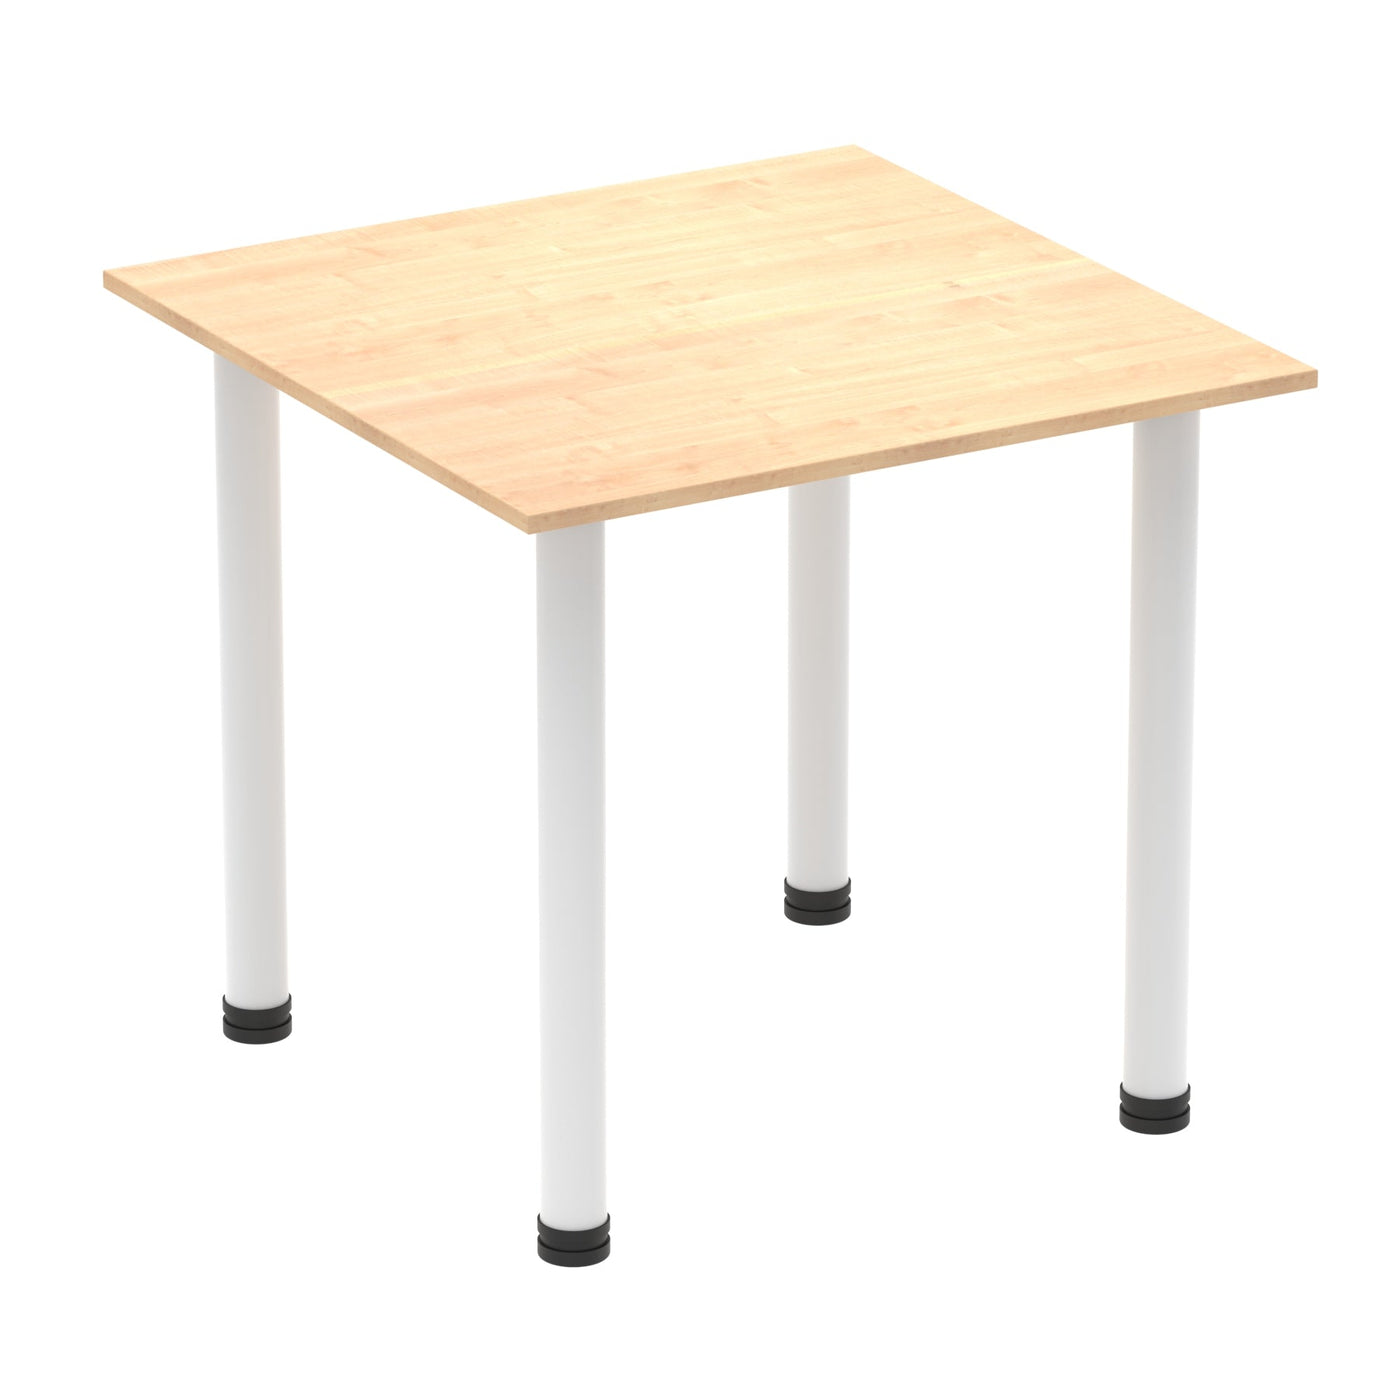 Impulse 1200mm Straight Desk with Post Leg | Home Office Furniture | Wooden Desk | Simple Desk | Homework Desk | Work From Home Desk | Wooden desk with black legs